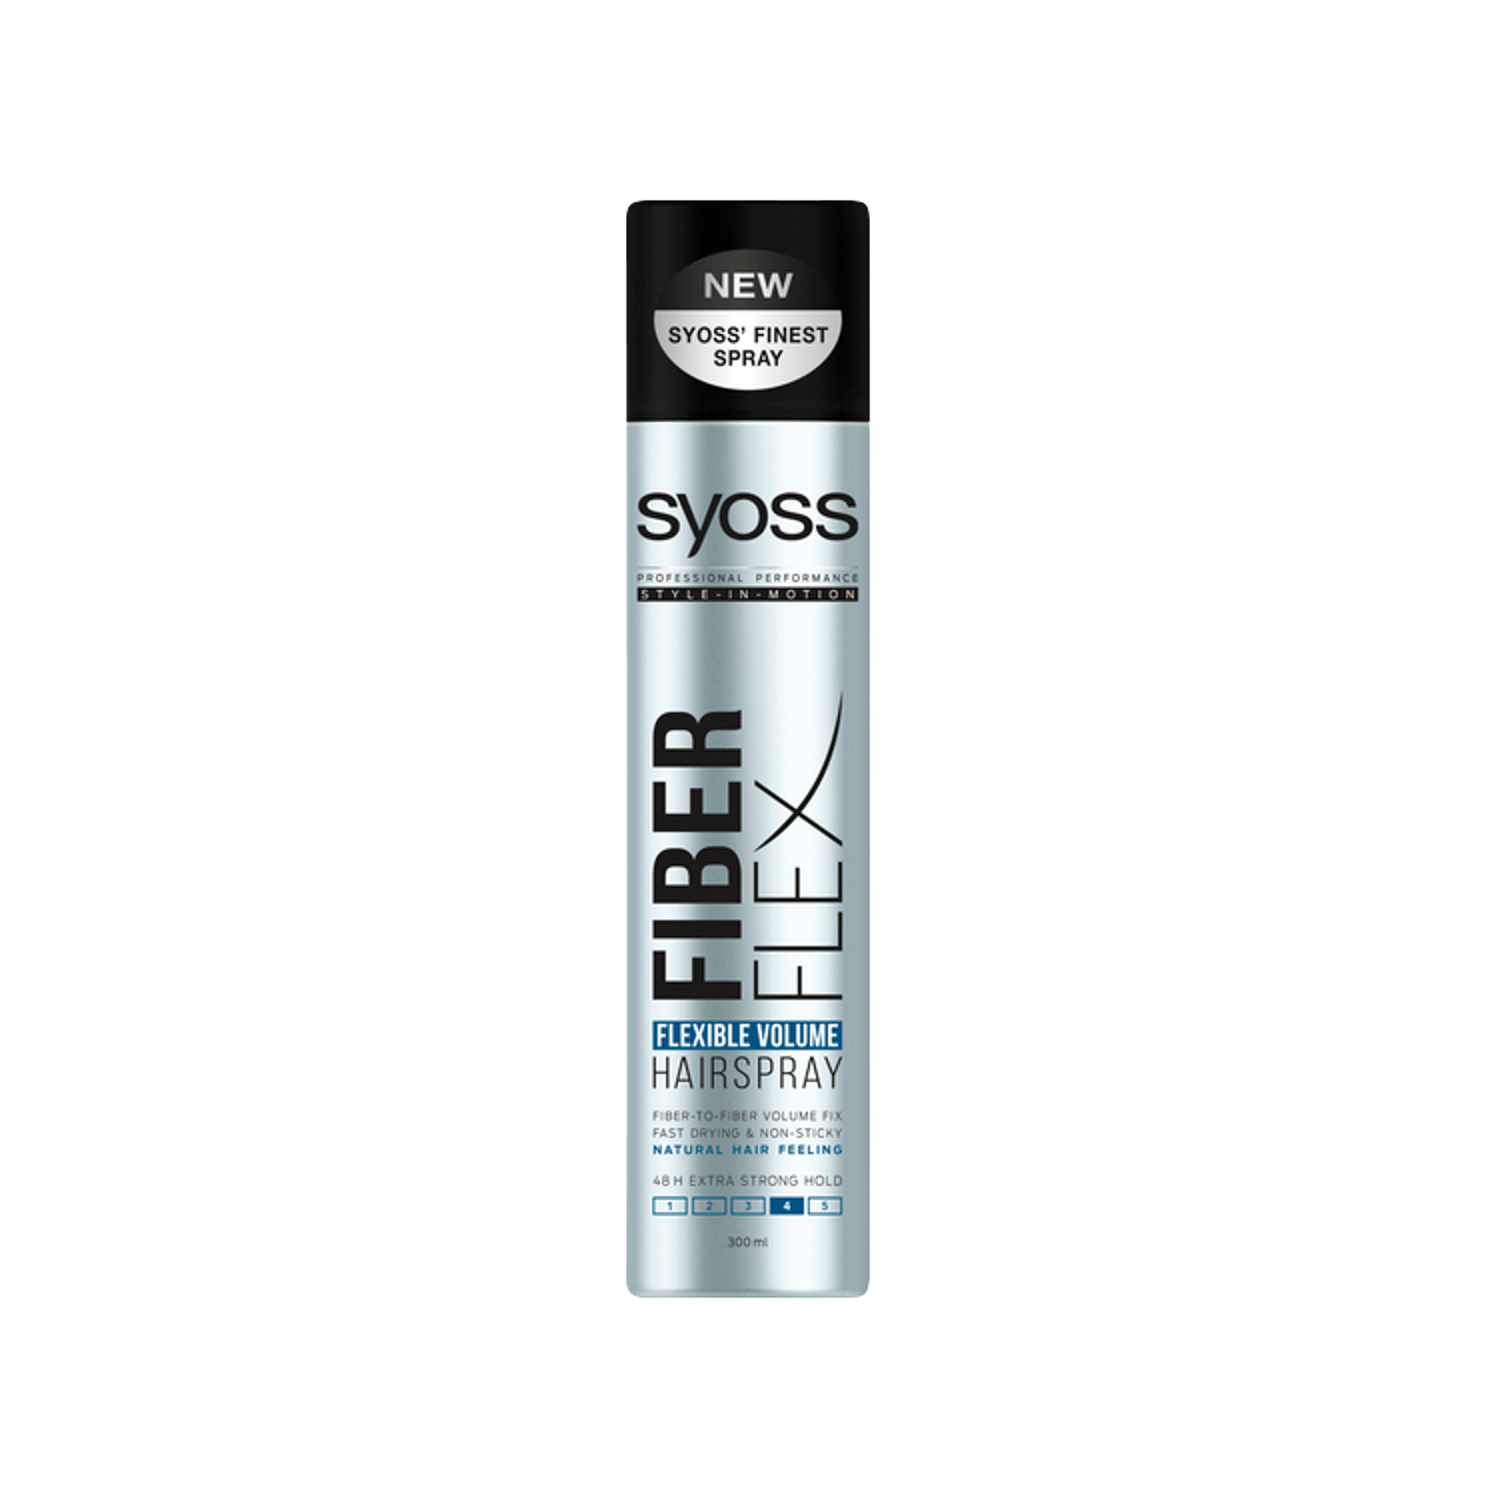 Лак для волос экстрасильного объема Syoss Fiberflex, 300 мл лаки для волос syoss лак для волос fiberflex упругий объем